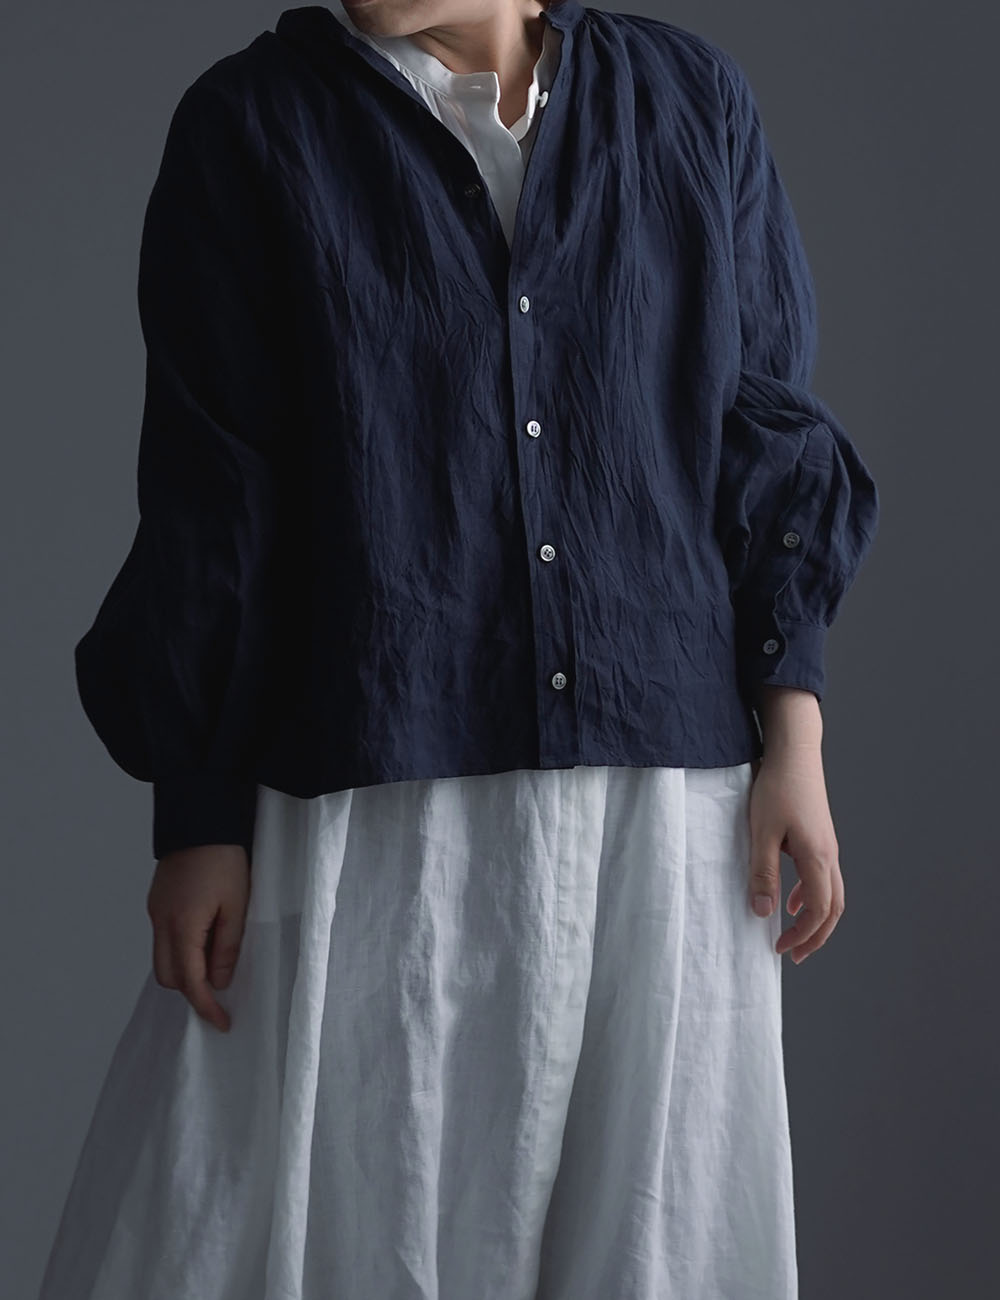 【wafu】 雅亜麻 linen shirt リネンシャツ 薄地 60番手 ハンドワッシャー /紺青(こんじょう) t034a-kju1